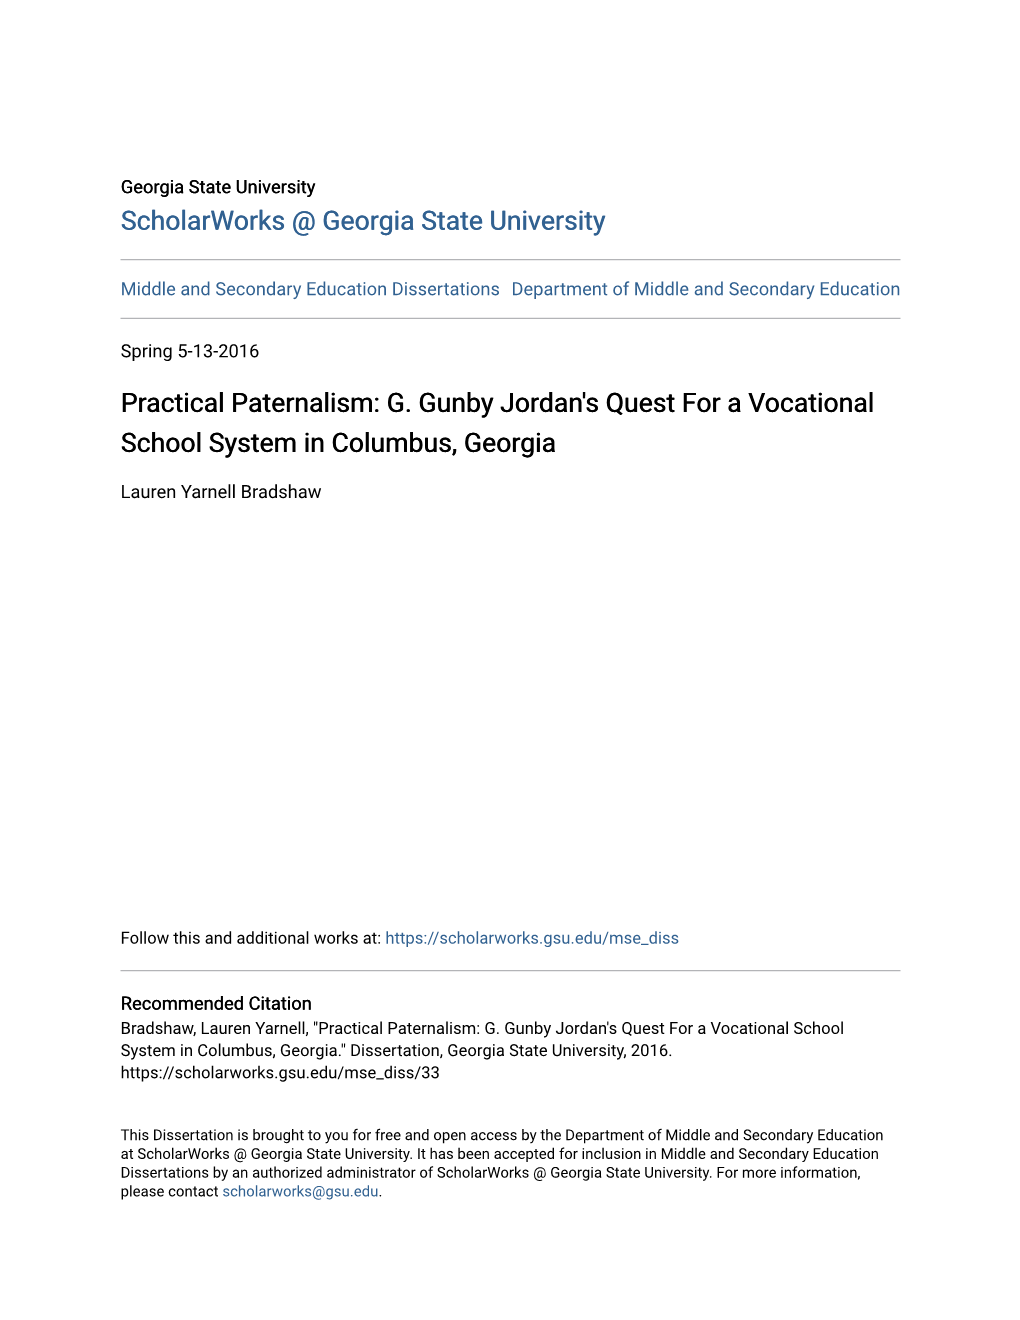 G. Gunby Jordan's Quest for a Vocational School System in Columbus, Georgia